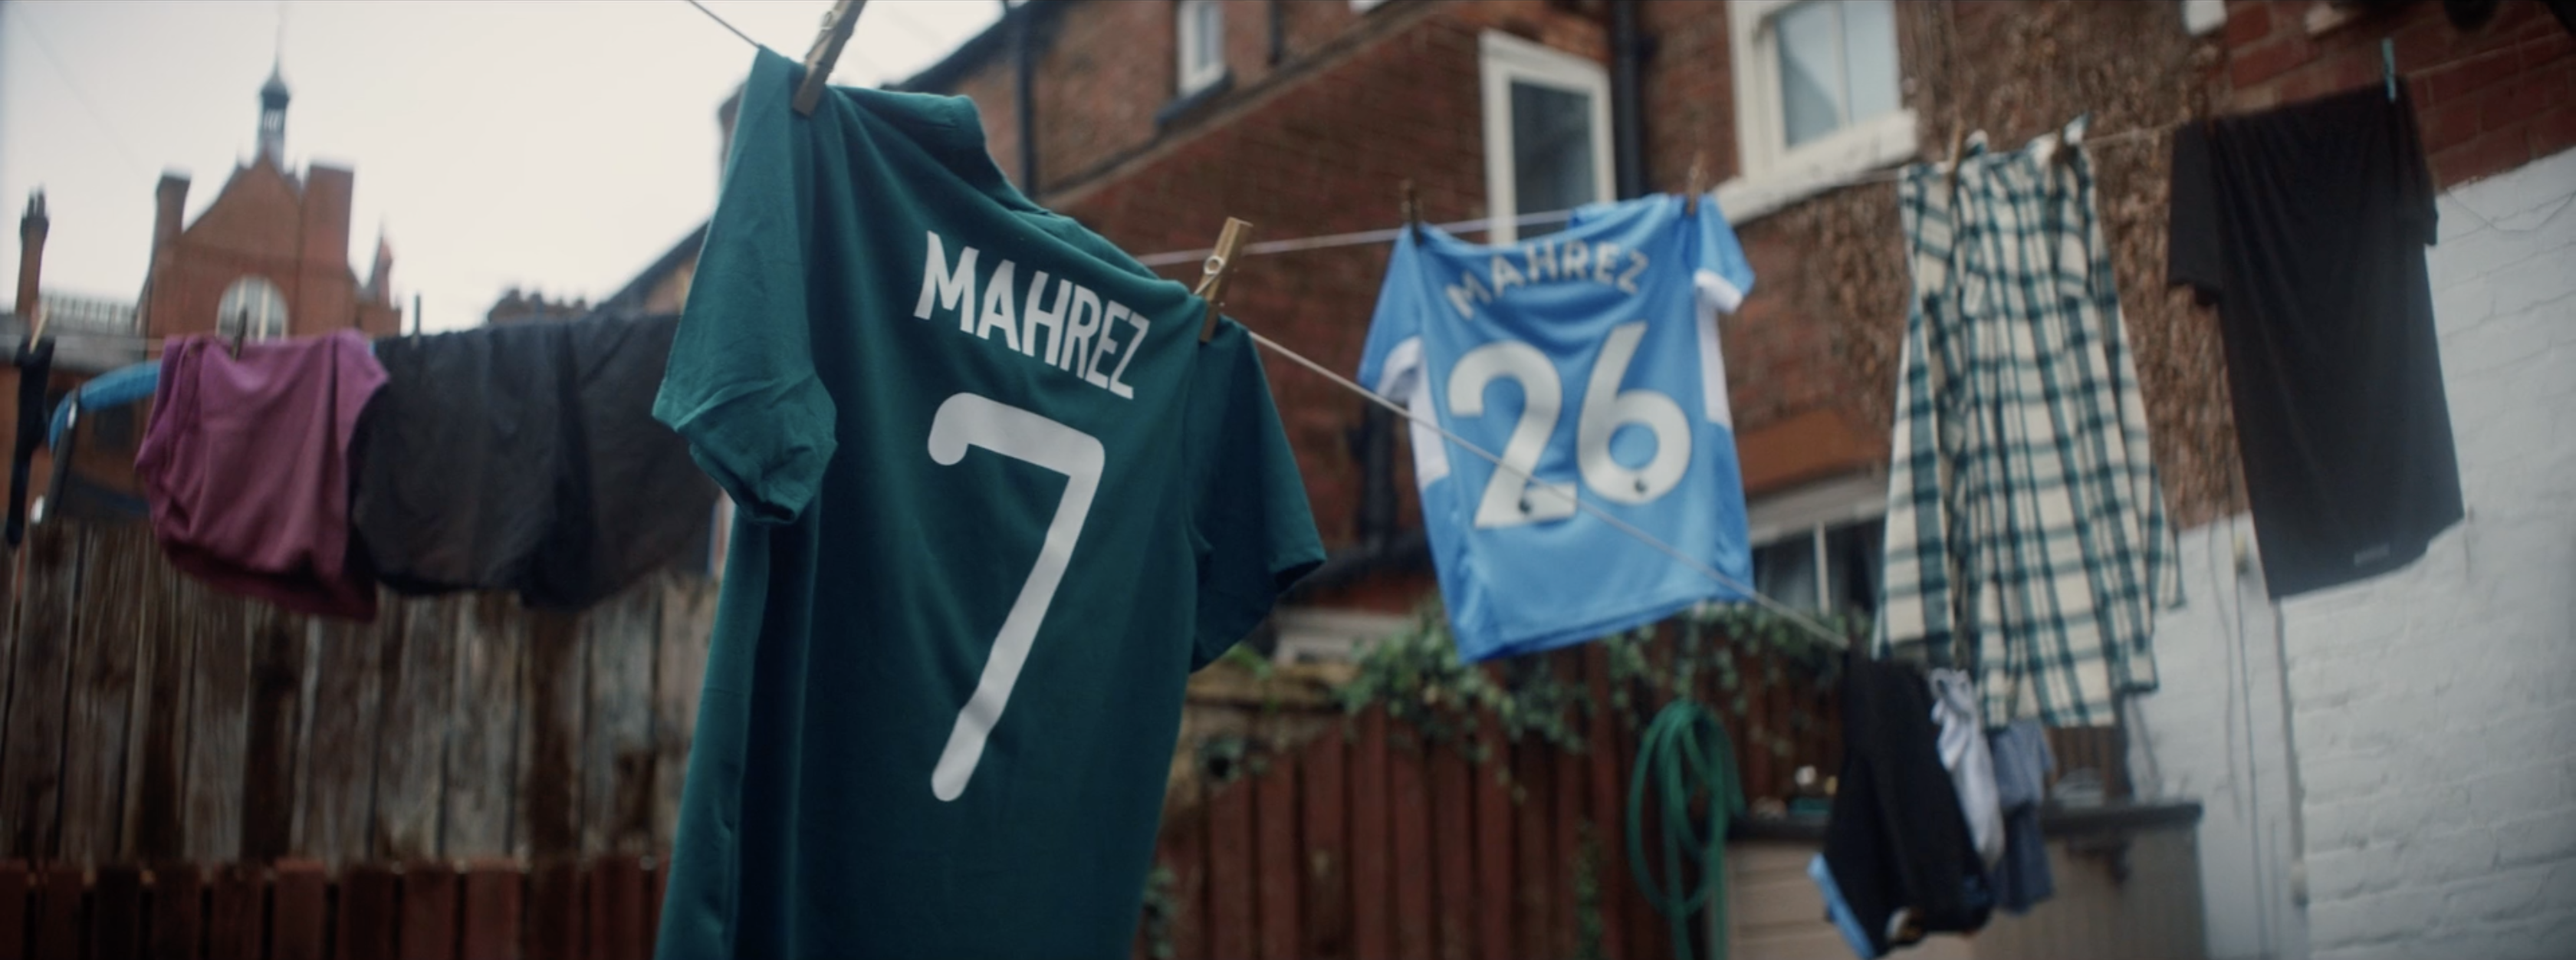 RM7 Manchester City